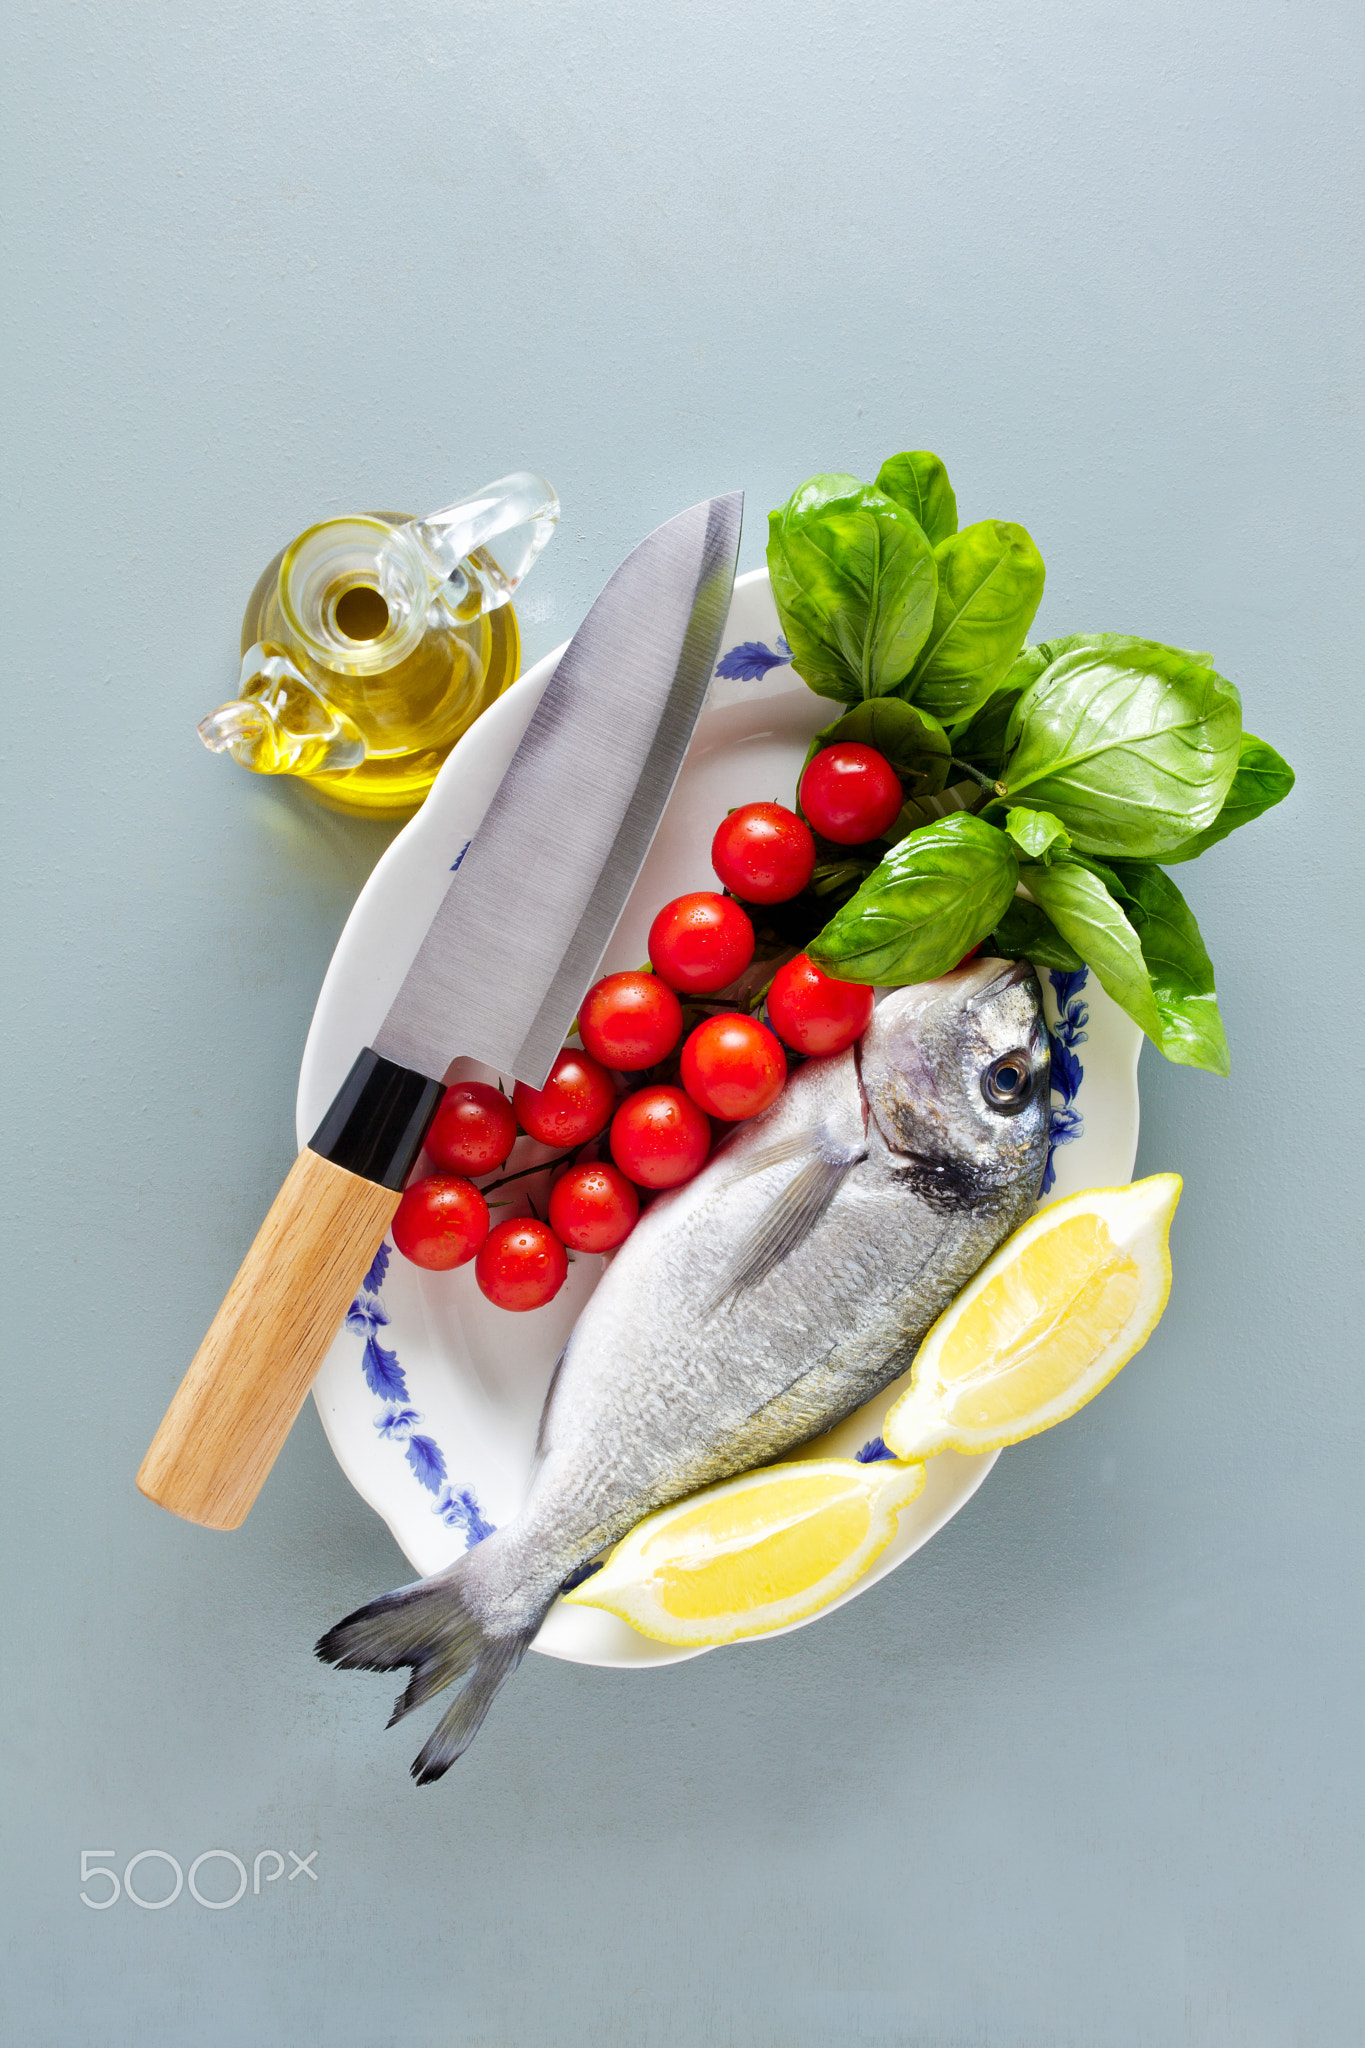 Fresh uncooked dorado or sea bream fish with lemon, herbs, oil,